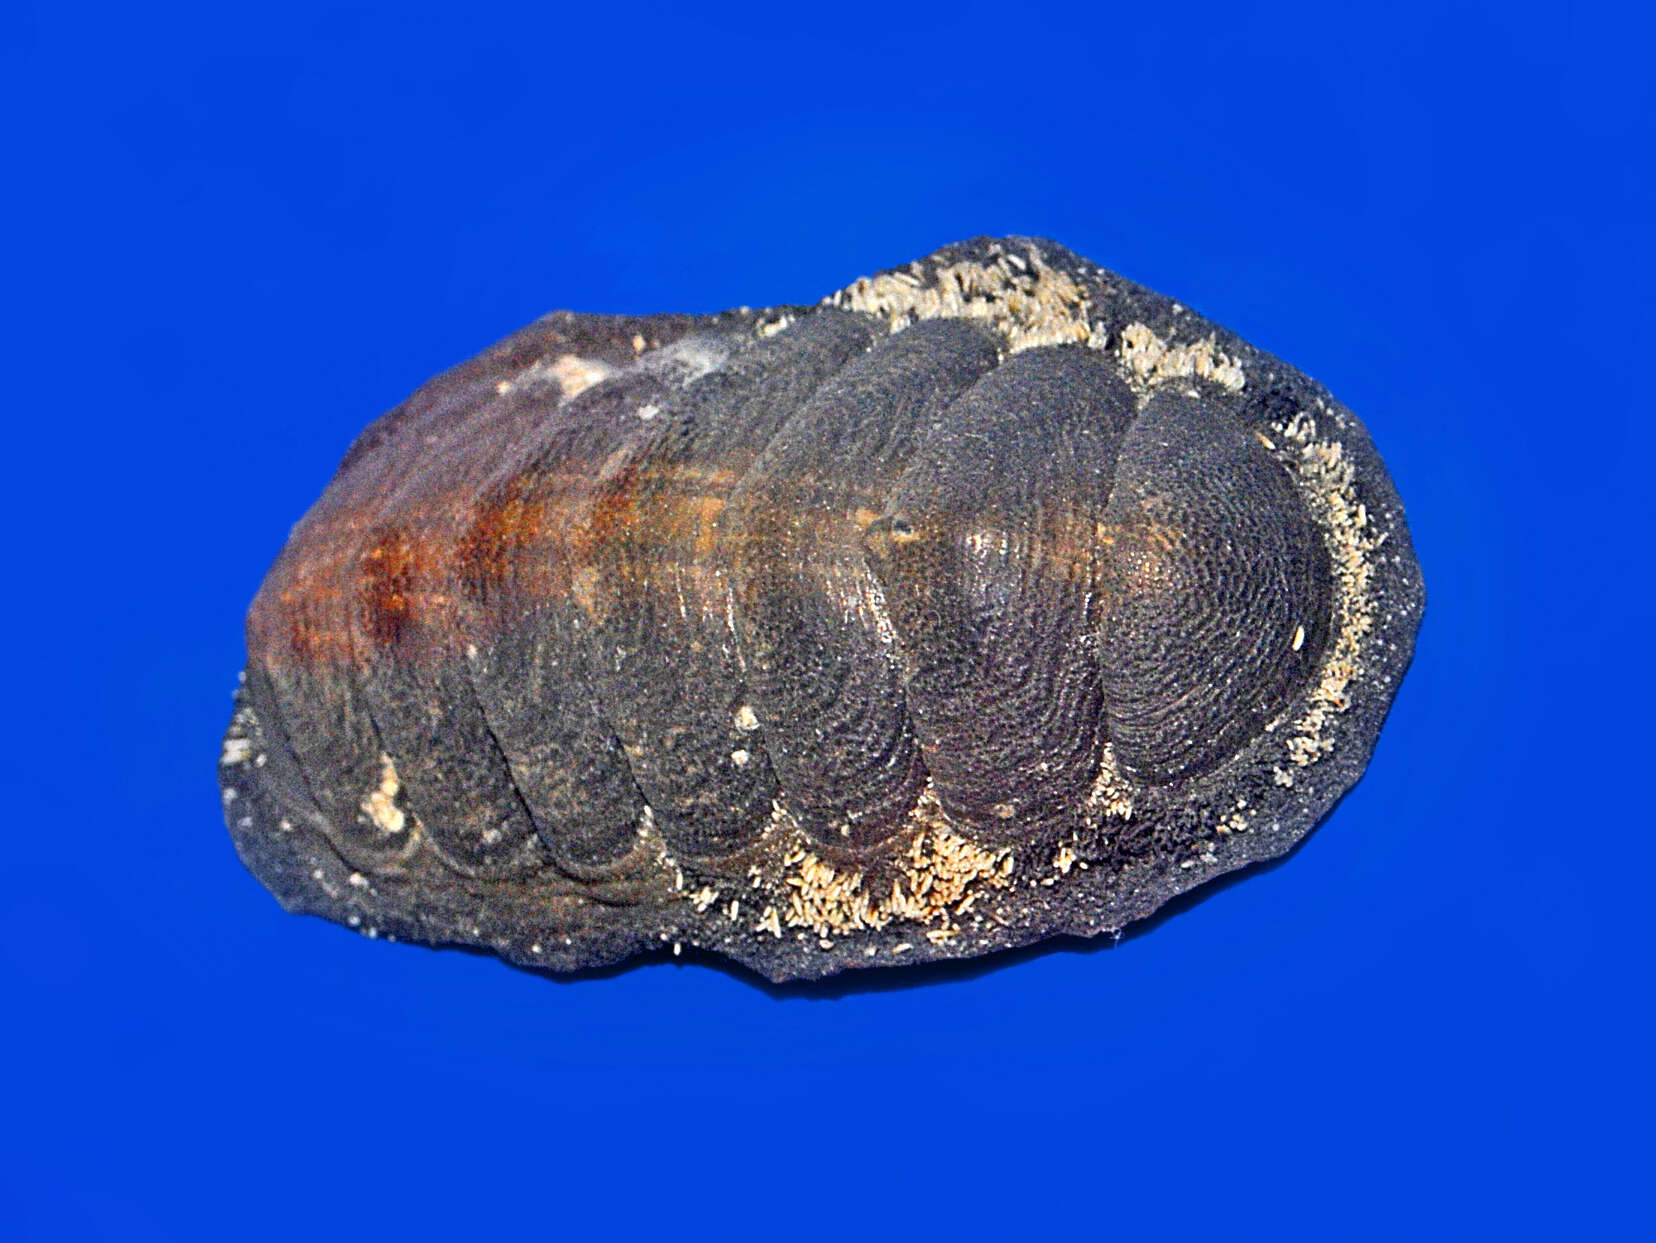 Image de Acanthopleura gemmata (Blainville 1825)